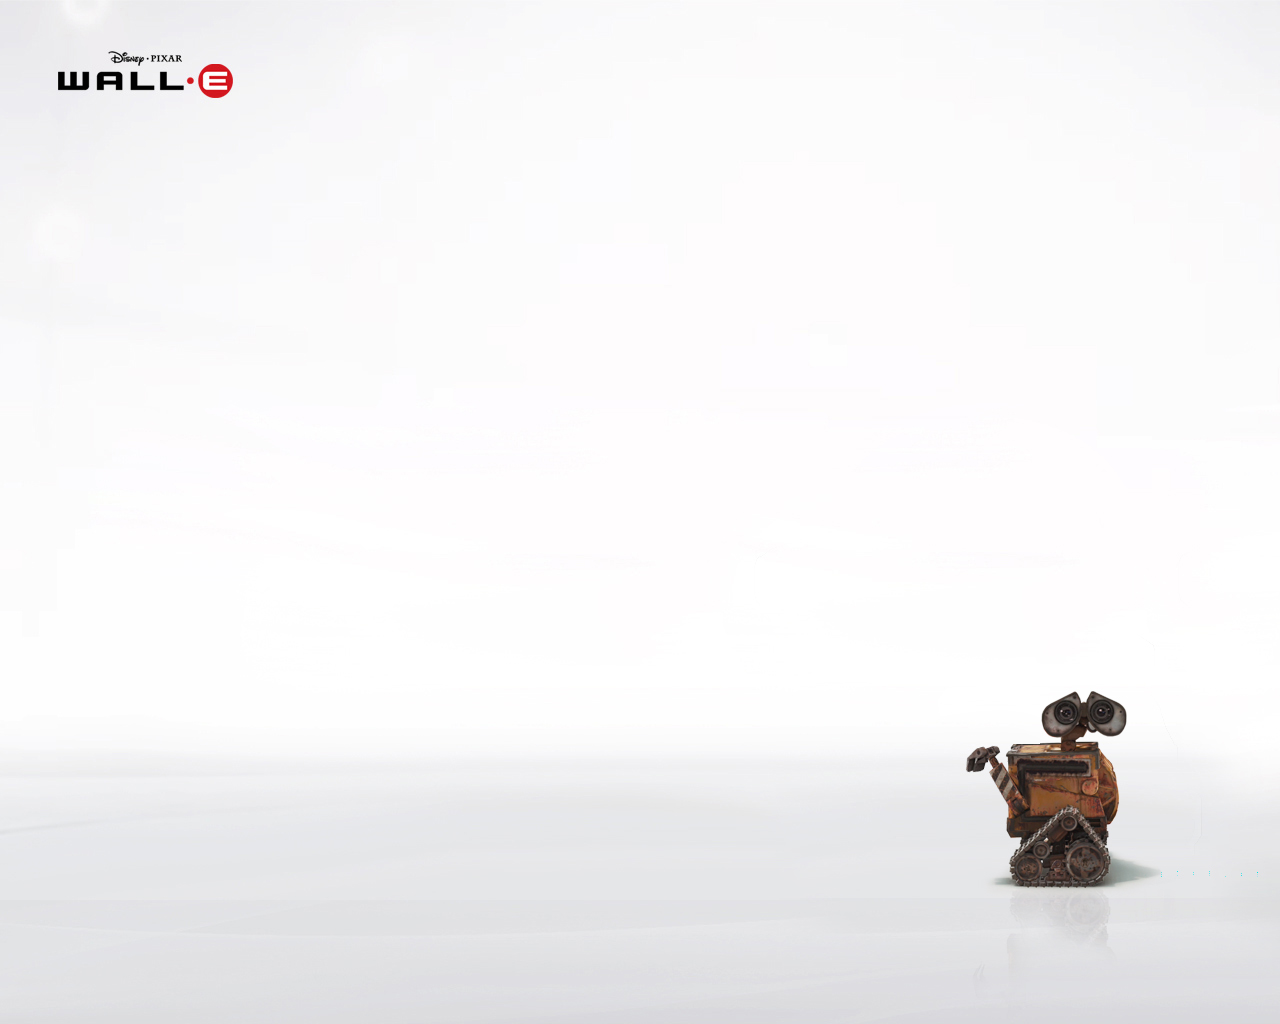 Download HQ WALL-E wallpaper / Movies / 1280x1024